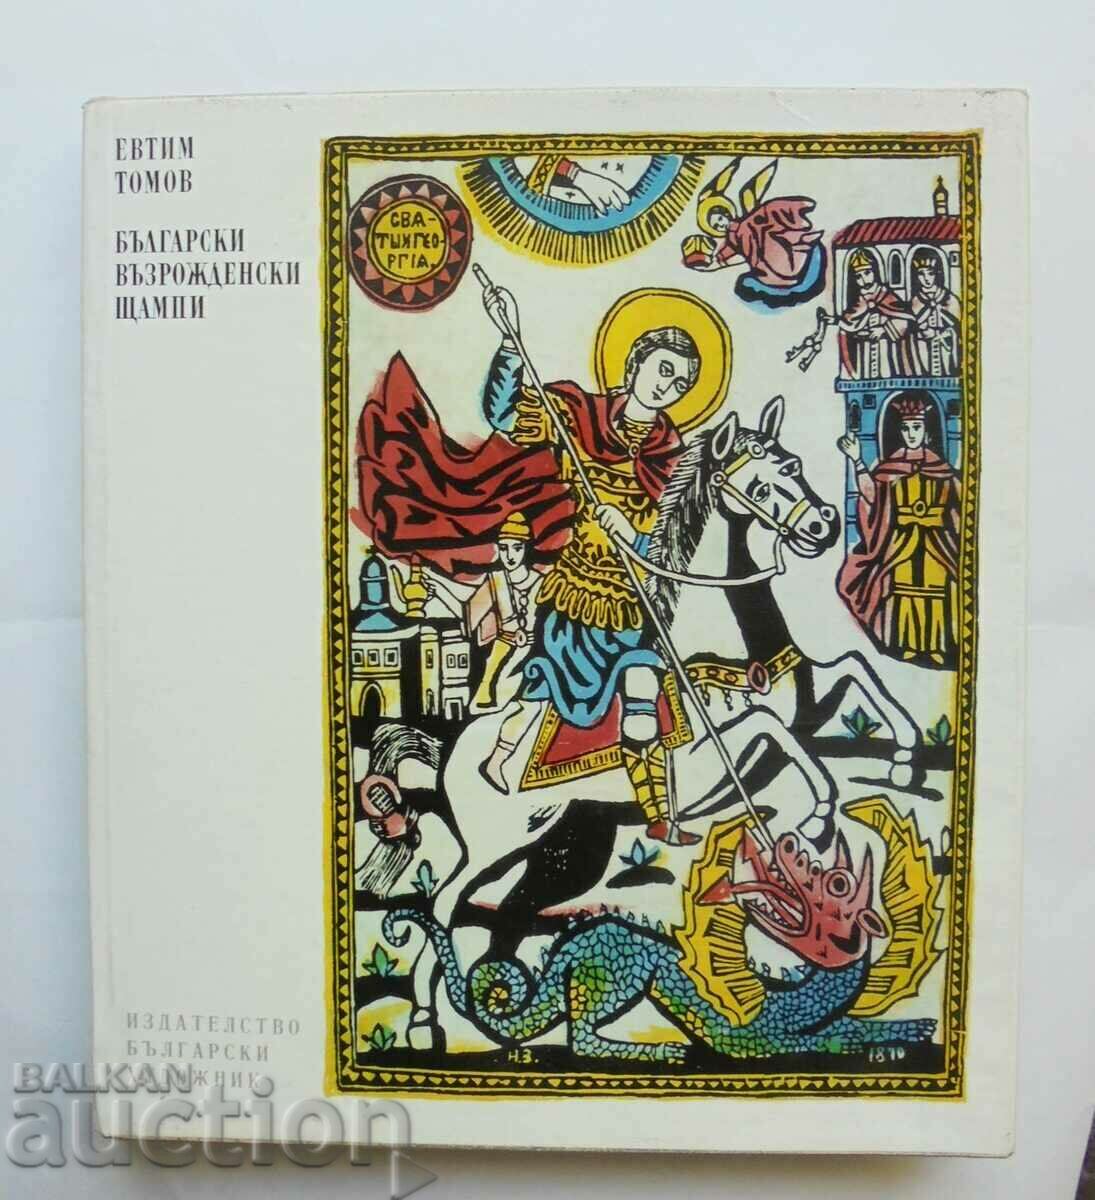 Bulgarian Revival Prints - Evtim Tomov 1975